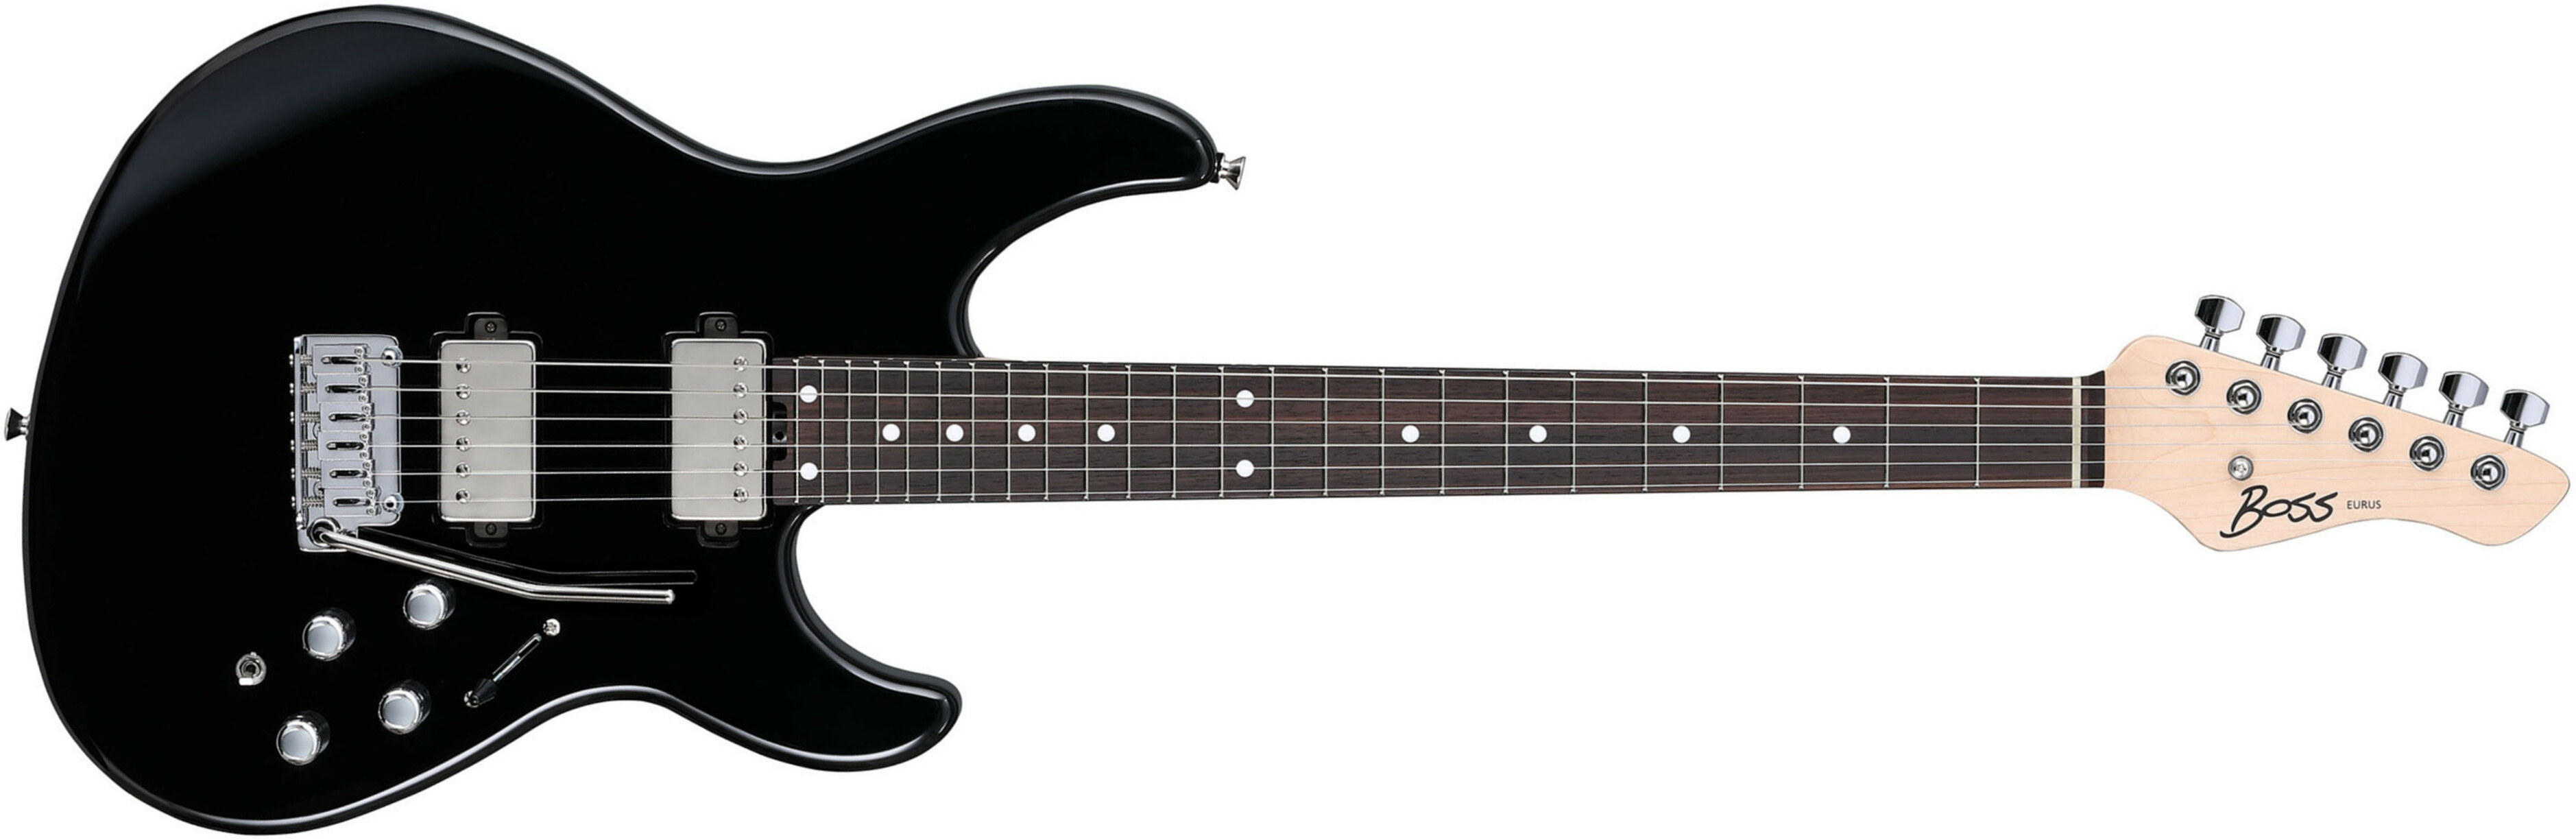 Boss Eurus Gs-1 Hh Trem Rw - Black - Modeling guitar - Main picture